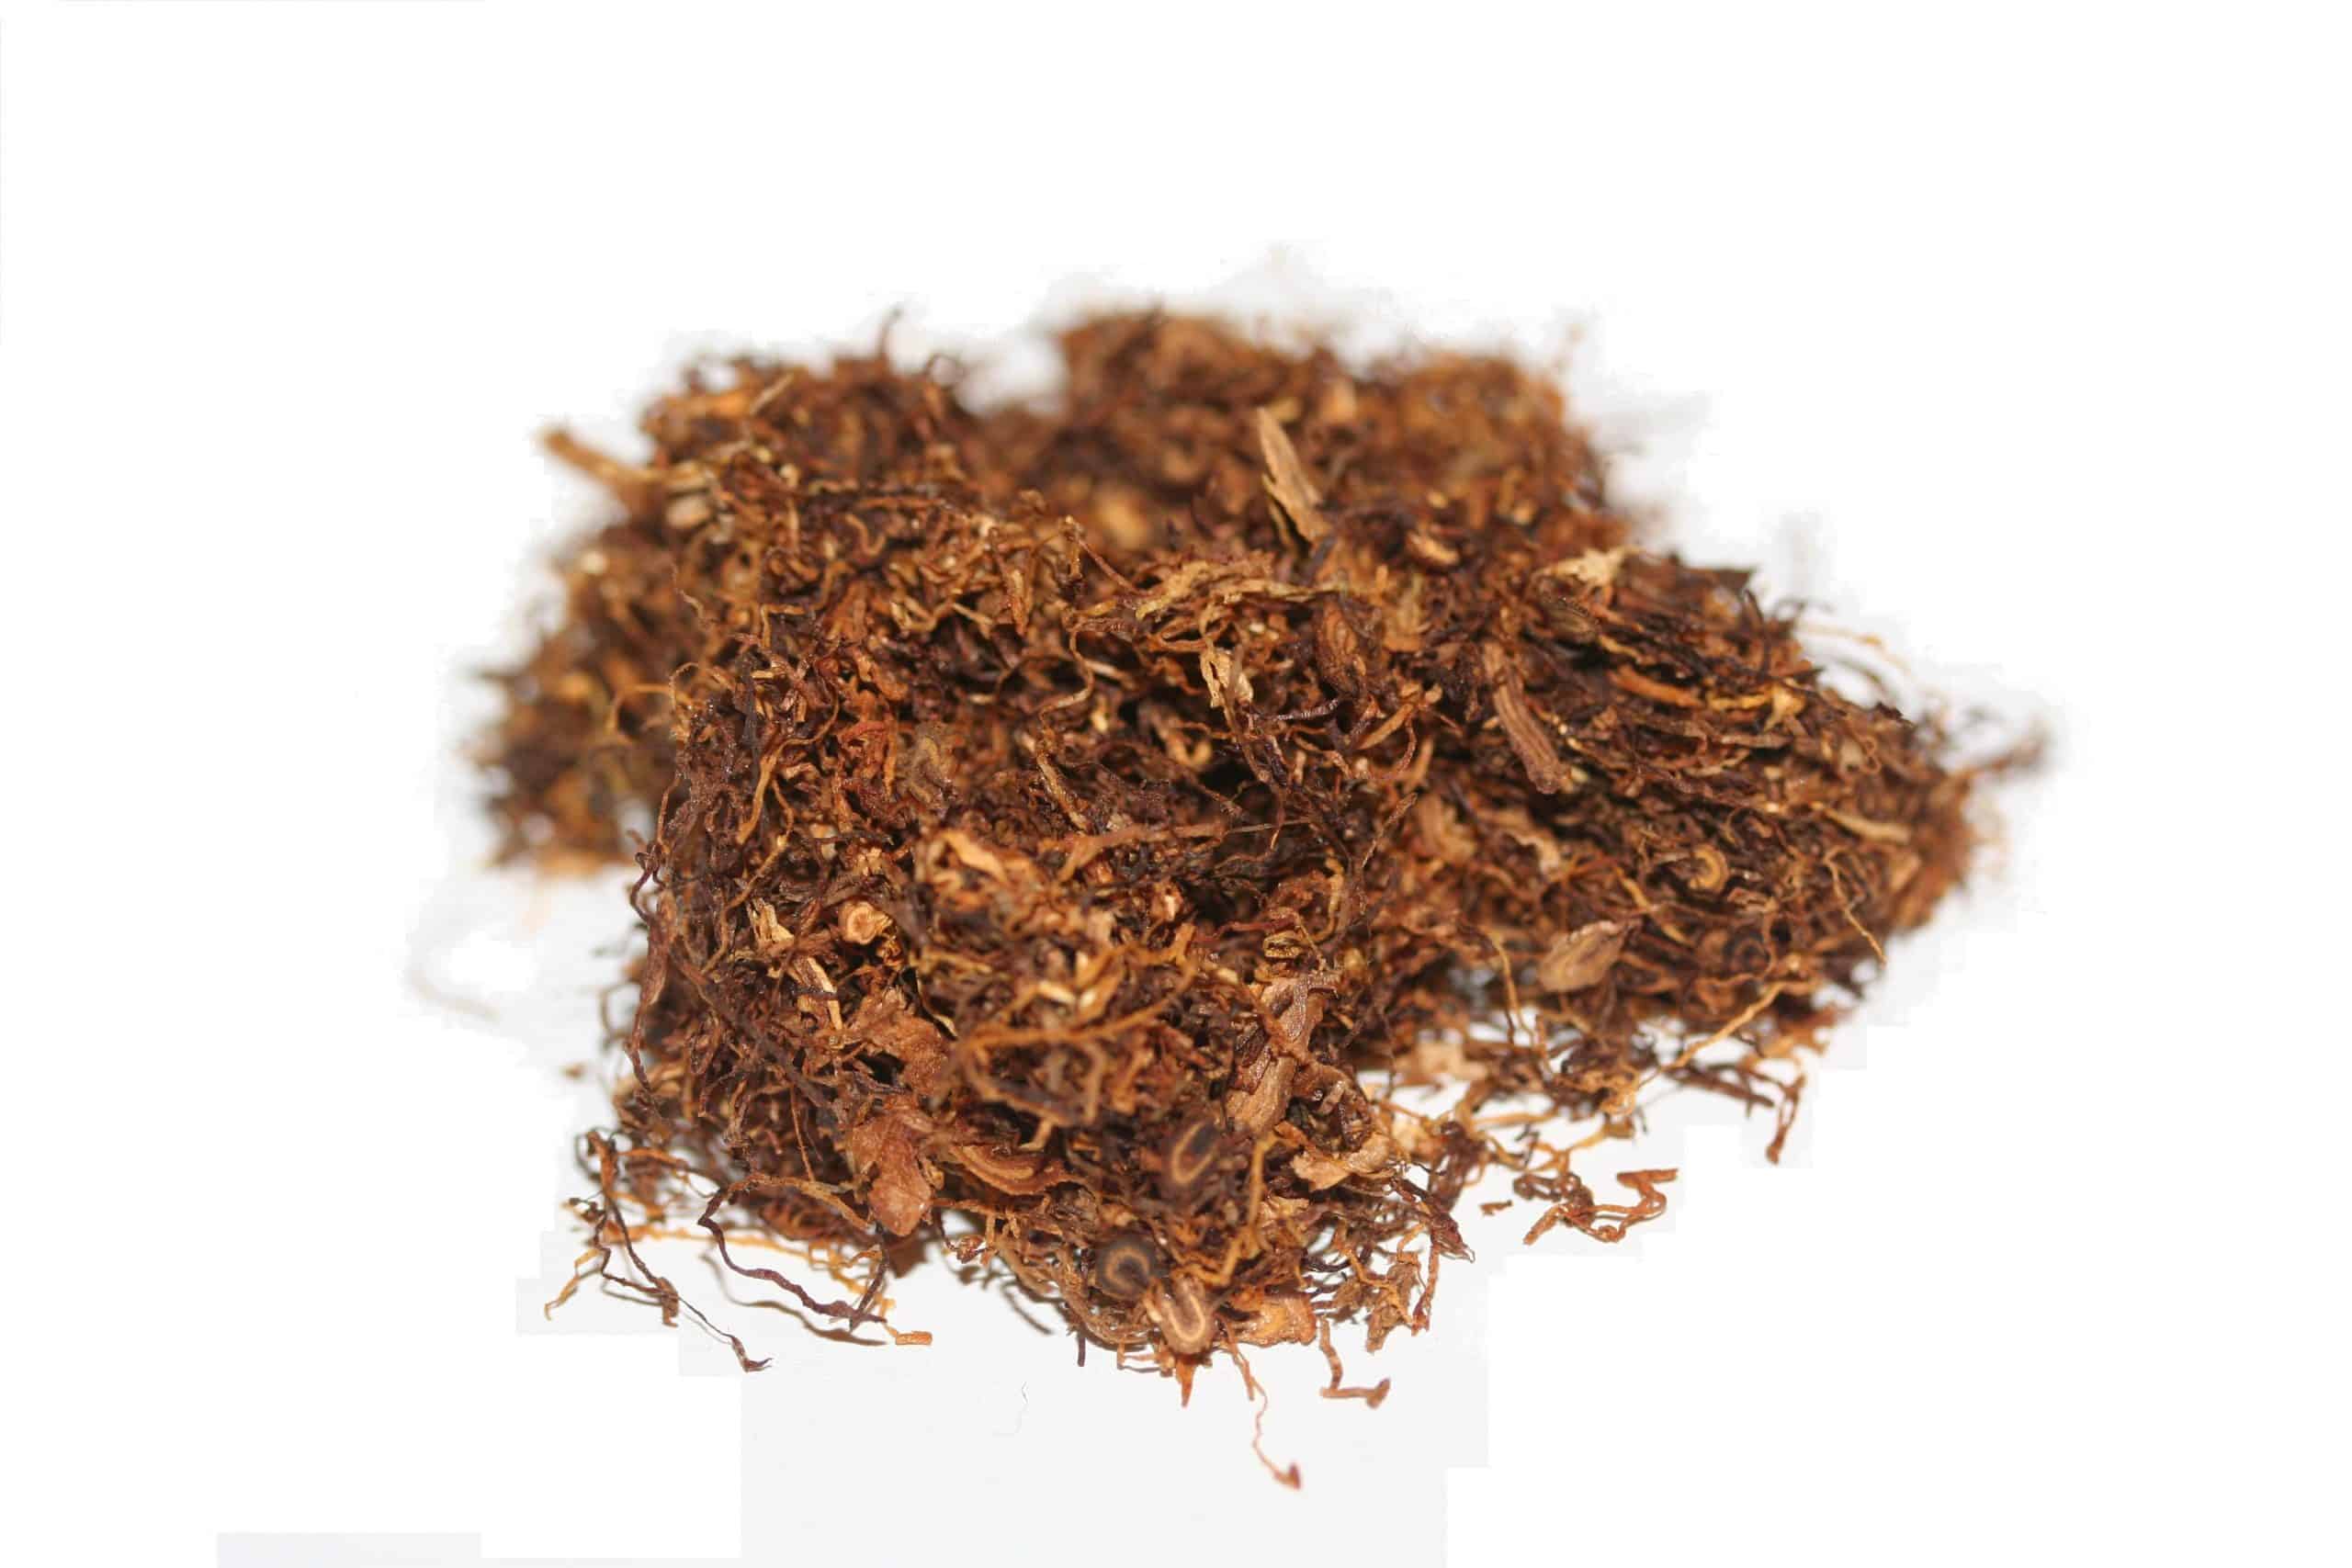 loose-leaf tobacco